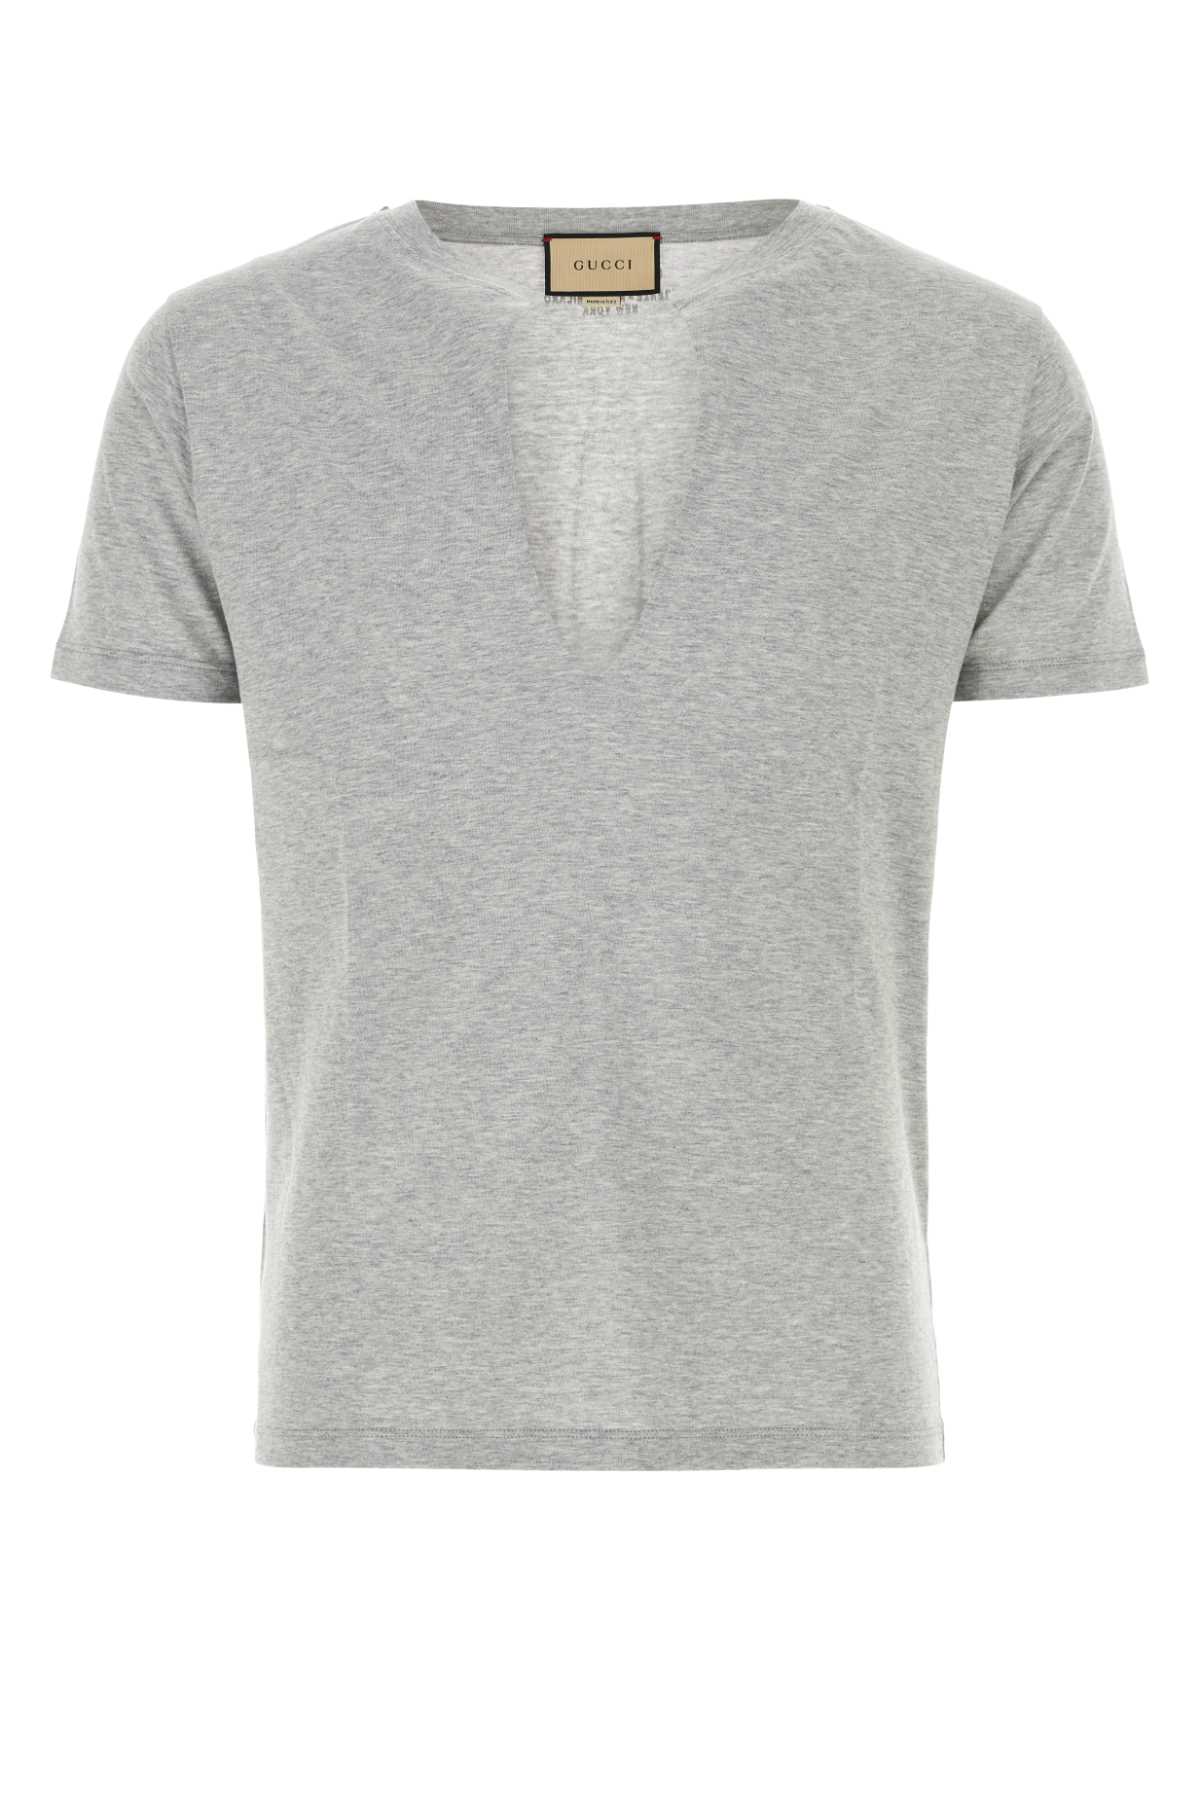 Gucci Melange Grey Cotton T-shirt